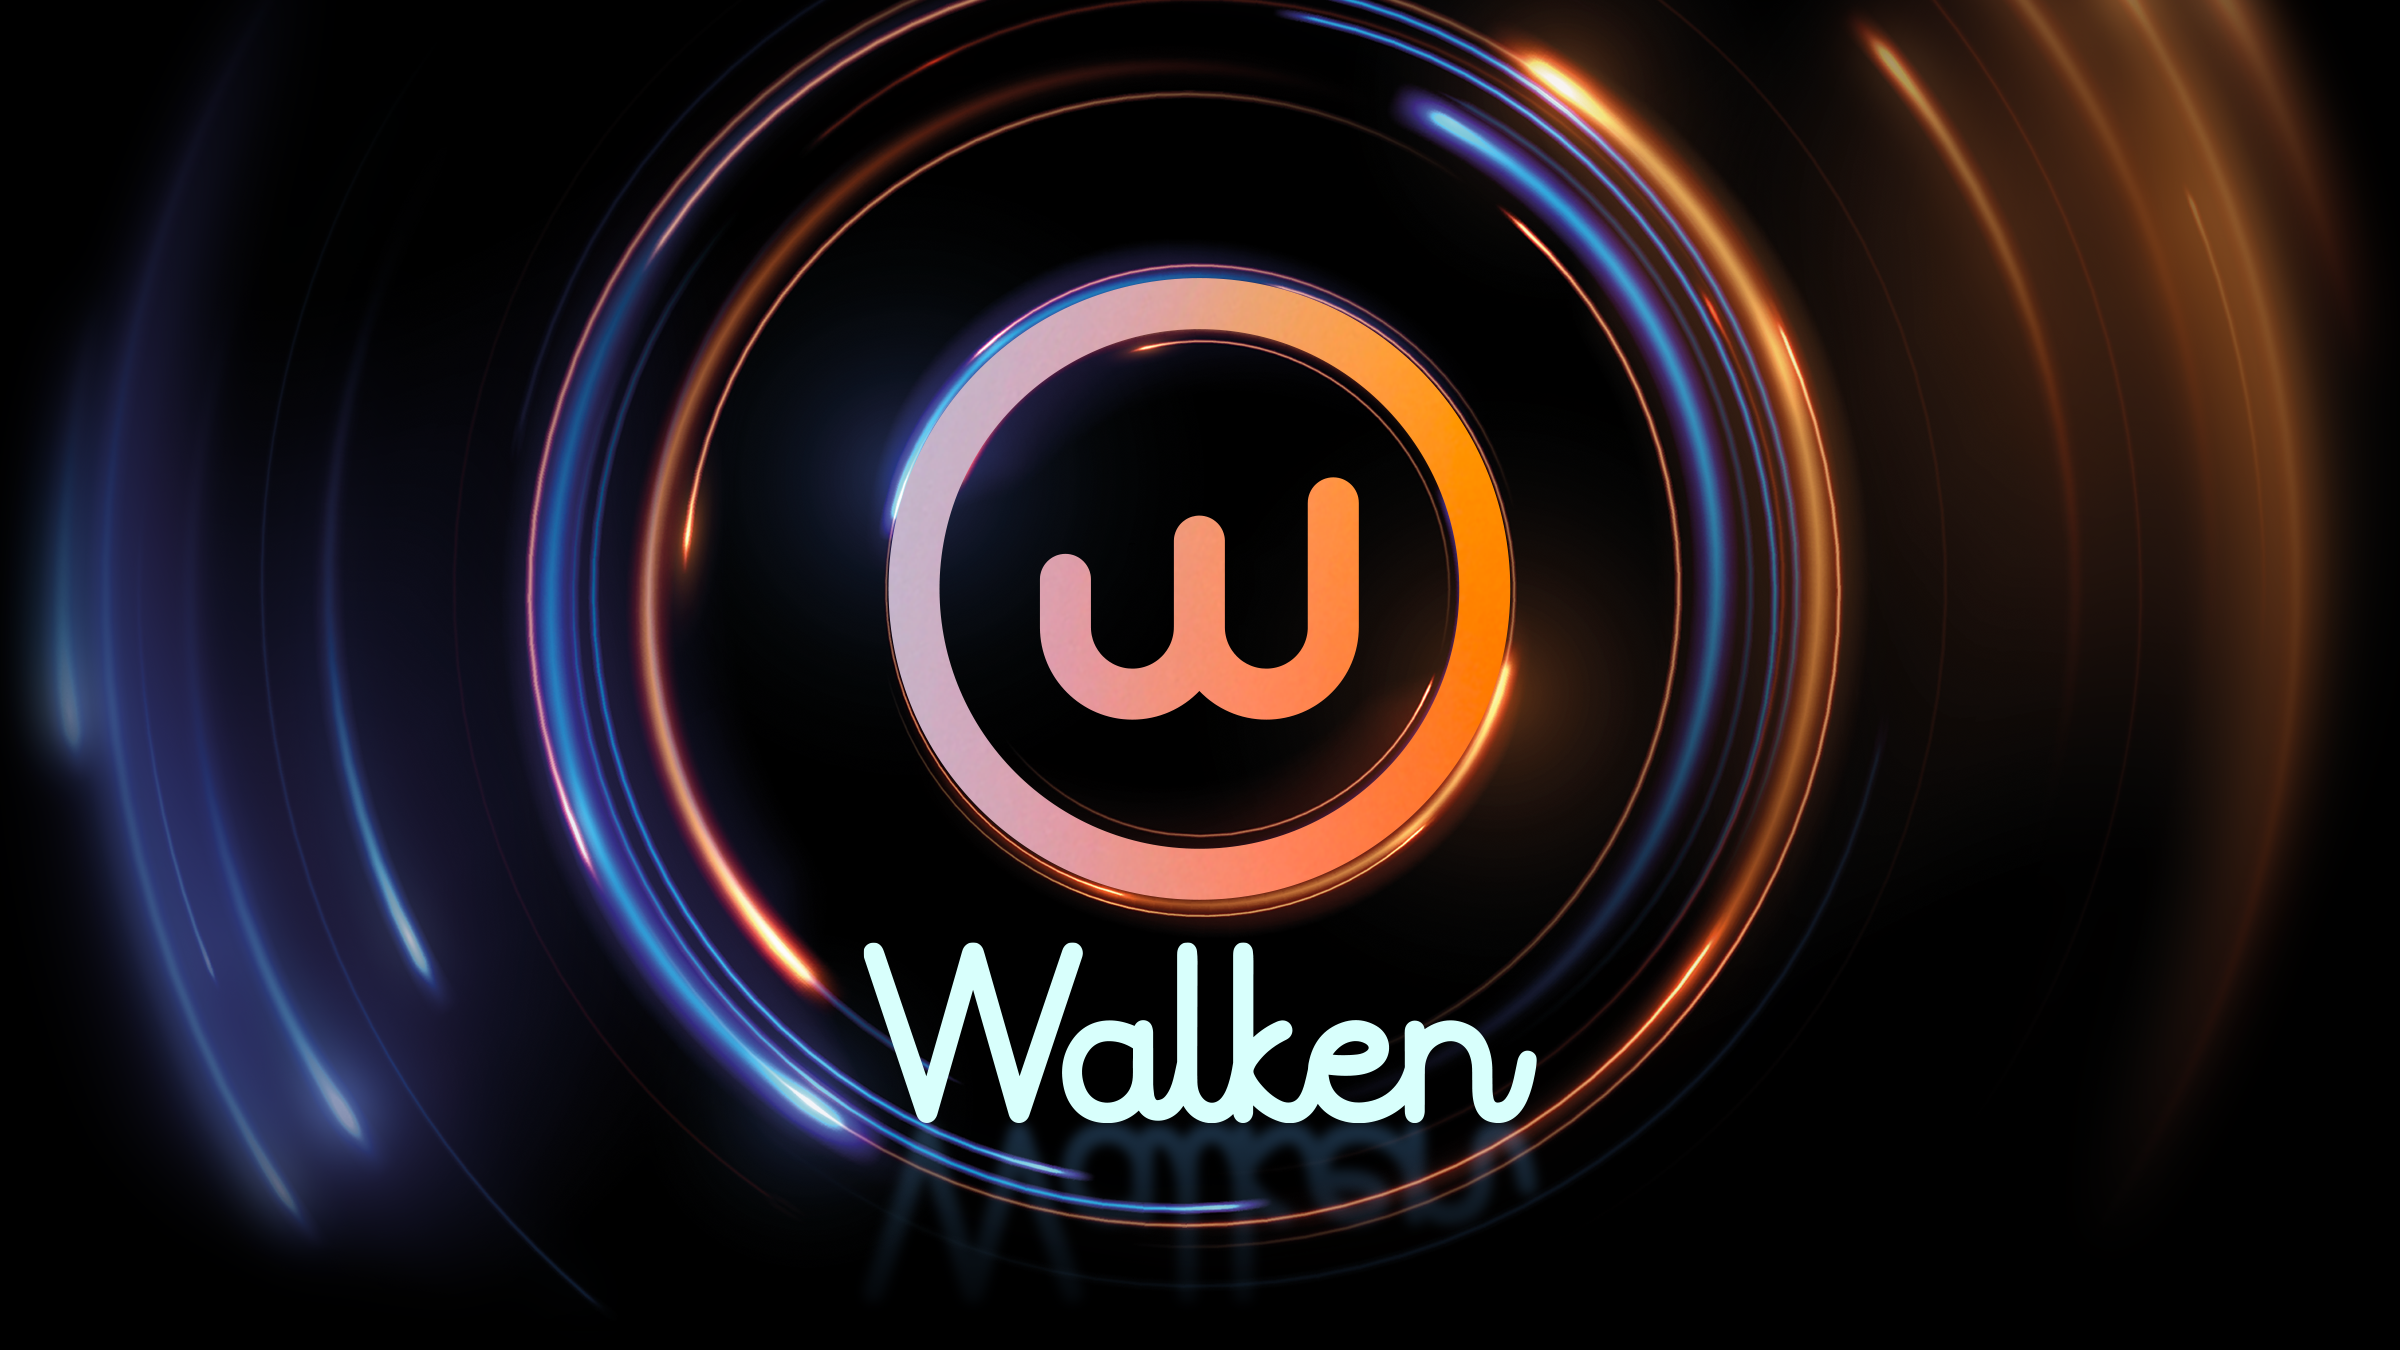 Walken (WLKN) cryptocurrency cover image